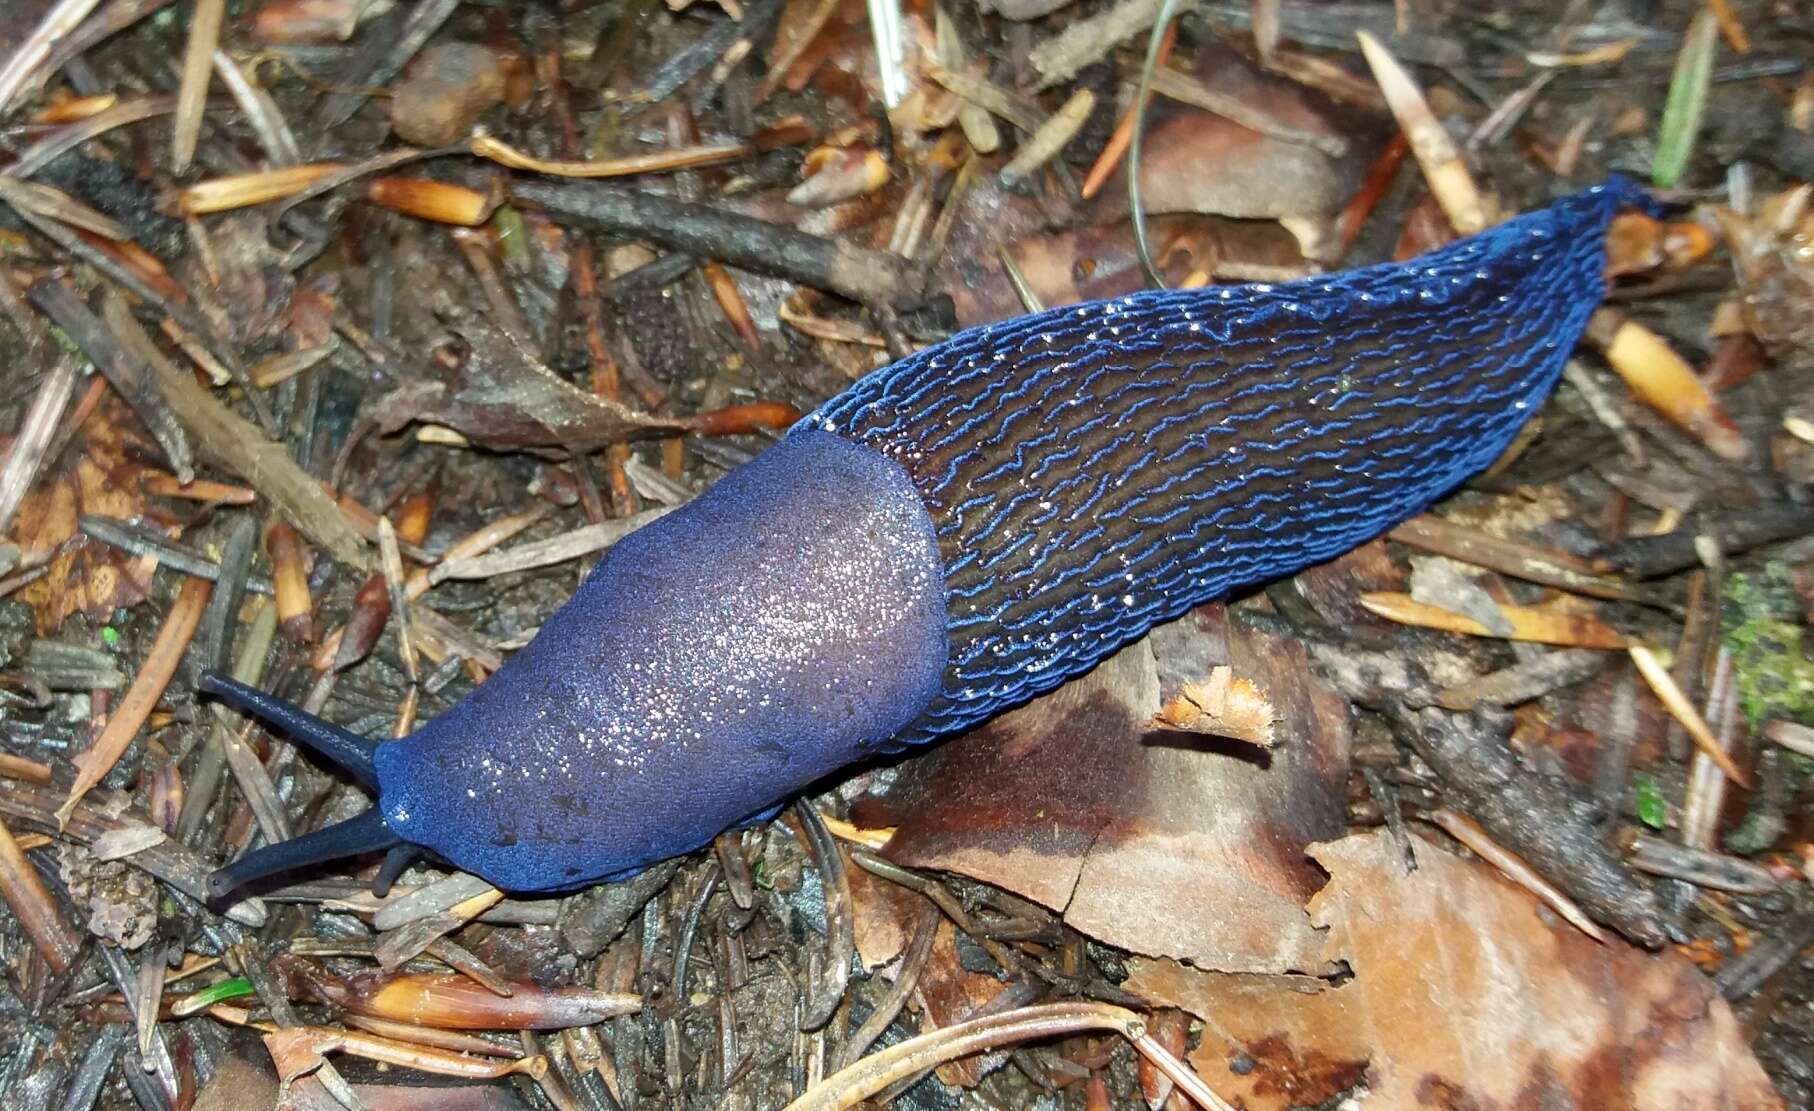 Image of Carpathian blue slug